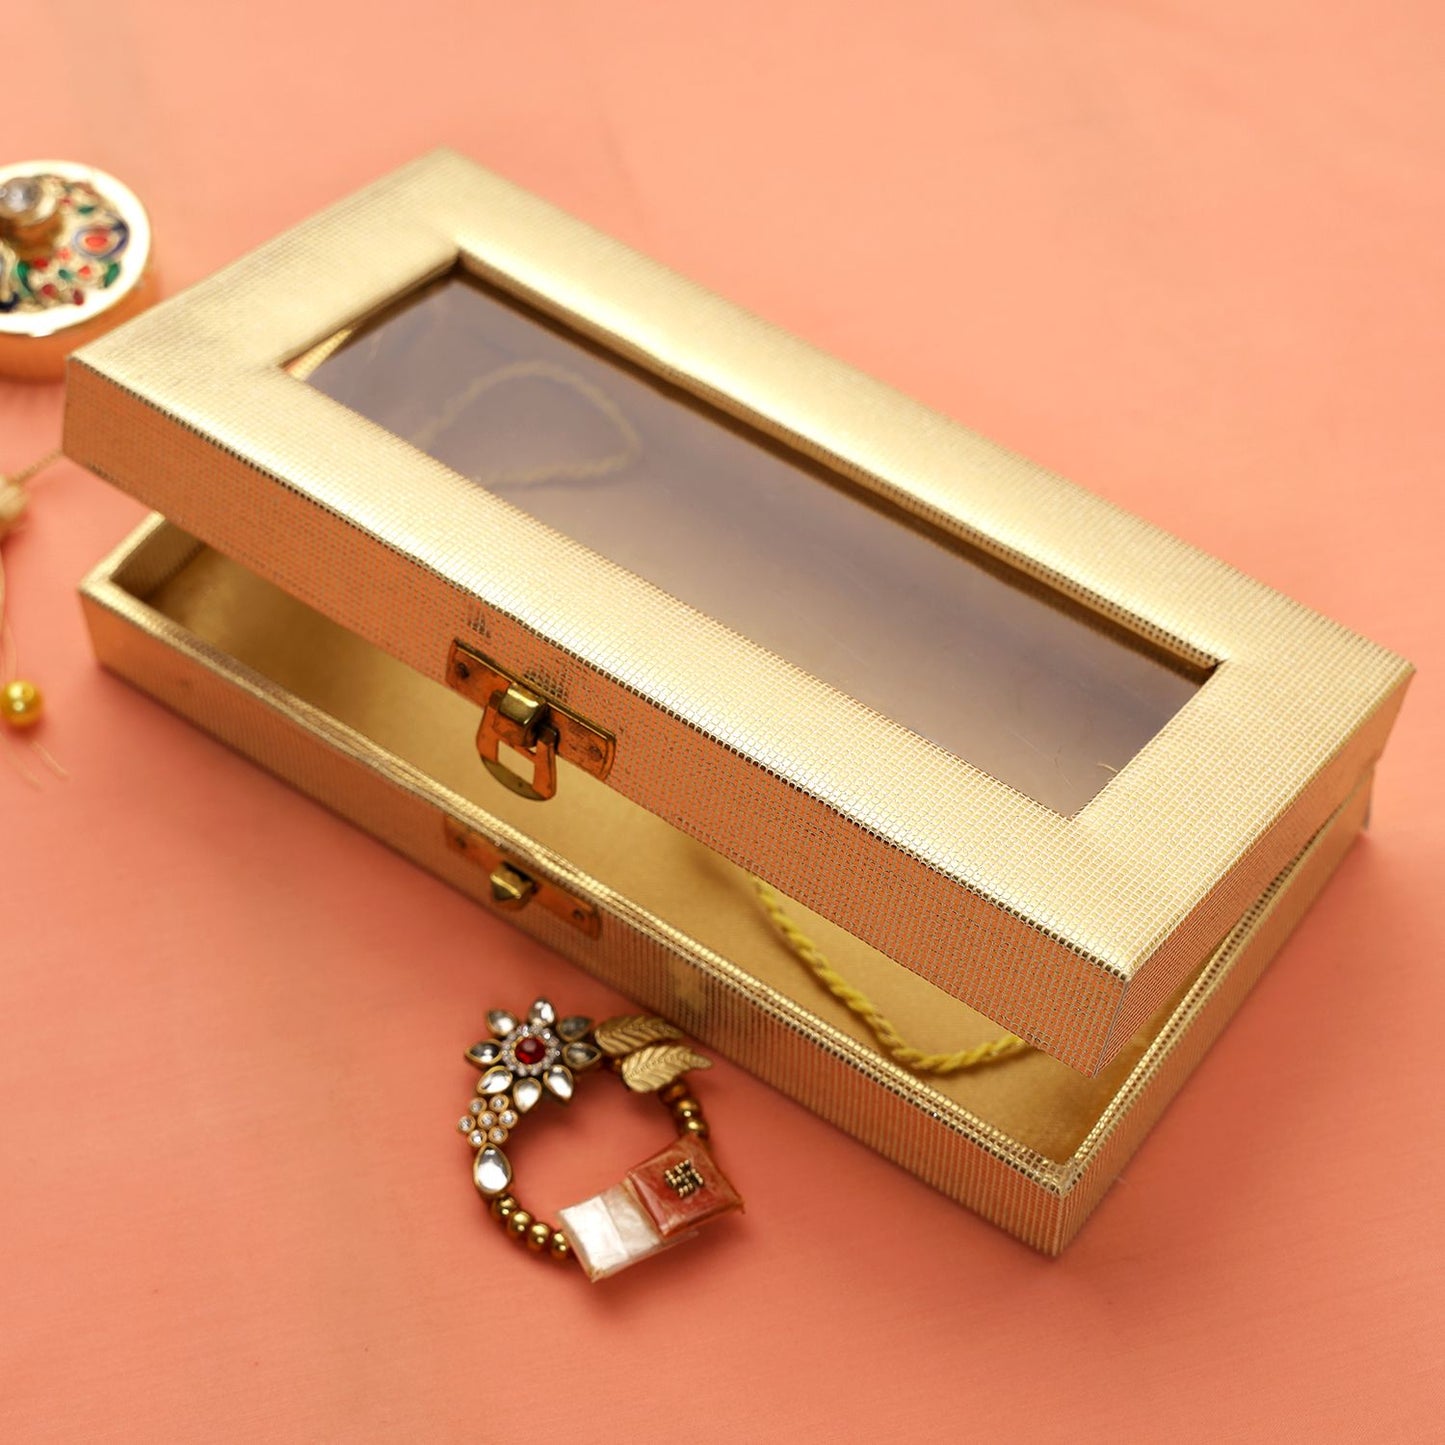 Stunning Golden Box